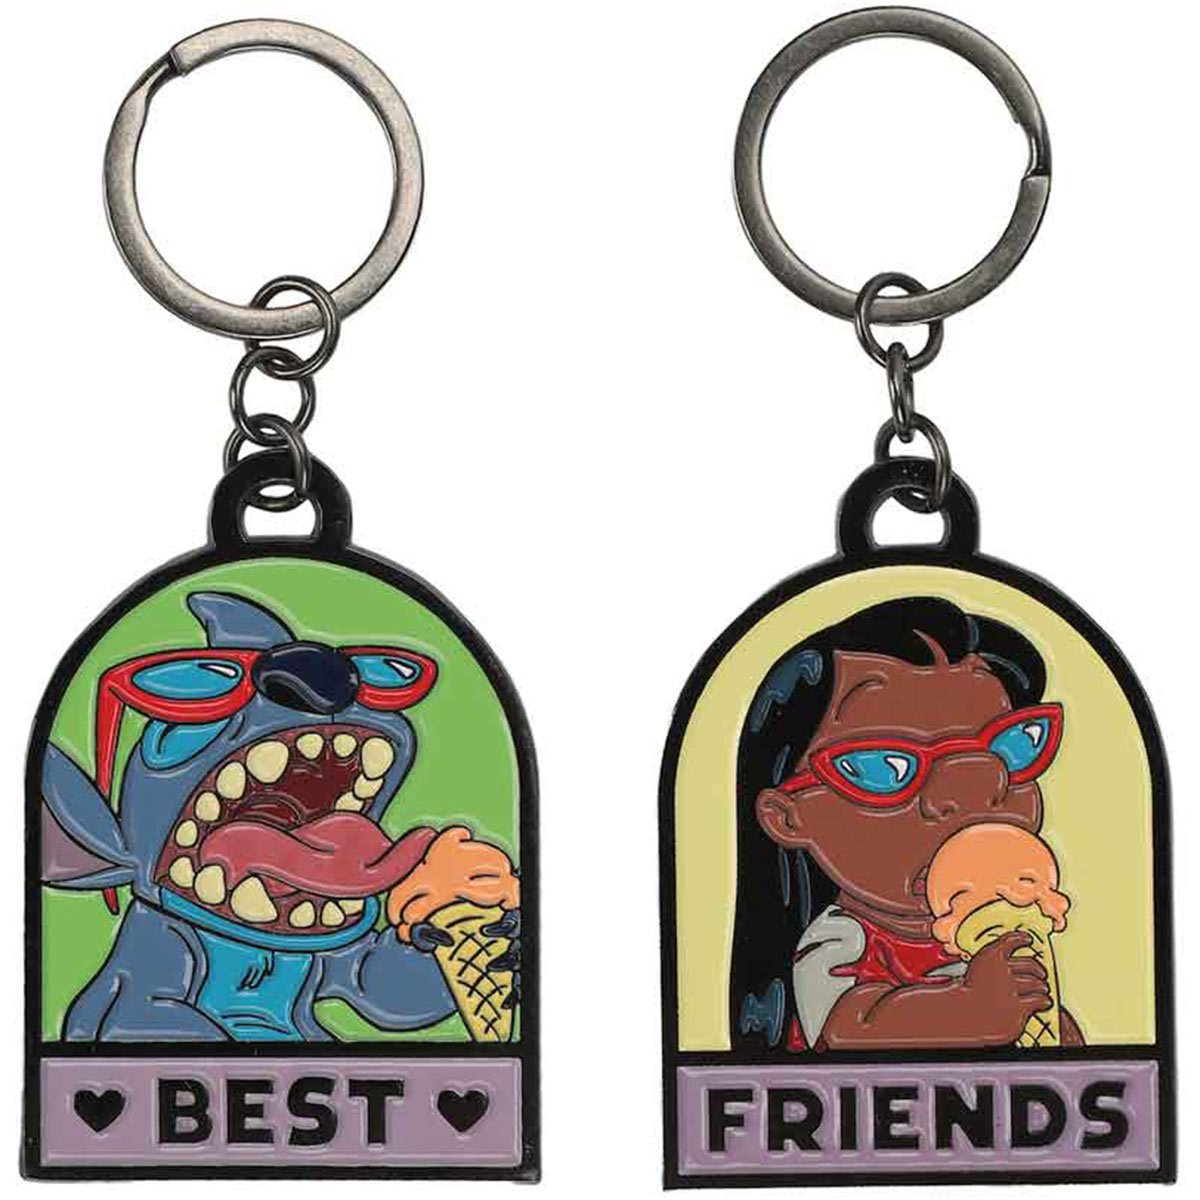 Bioworld Lilo and Stitch (Disney) Best Friends Matching Keychain Set